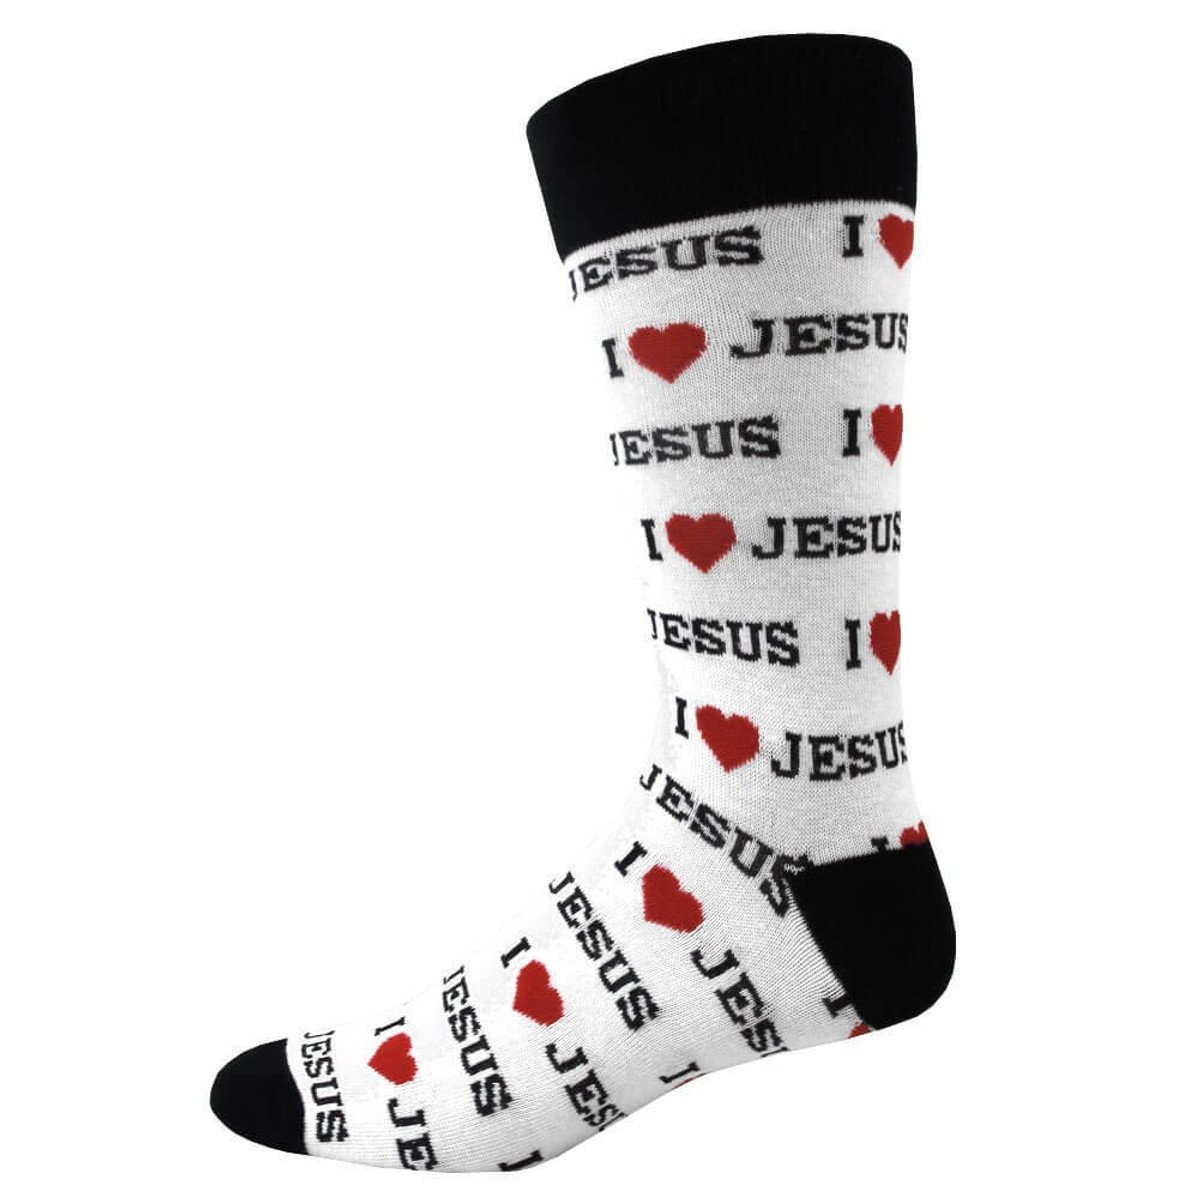 Men's "I Love Jesus" Crew Novelty Socks - White